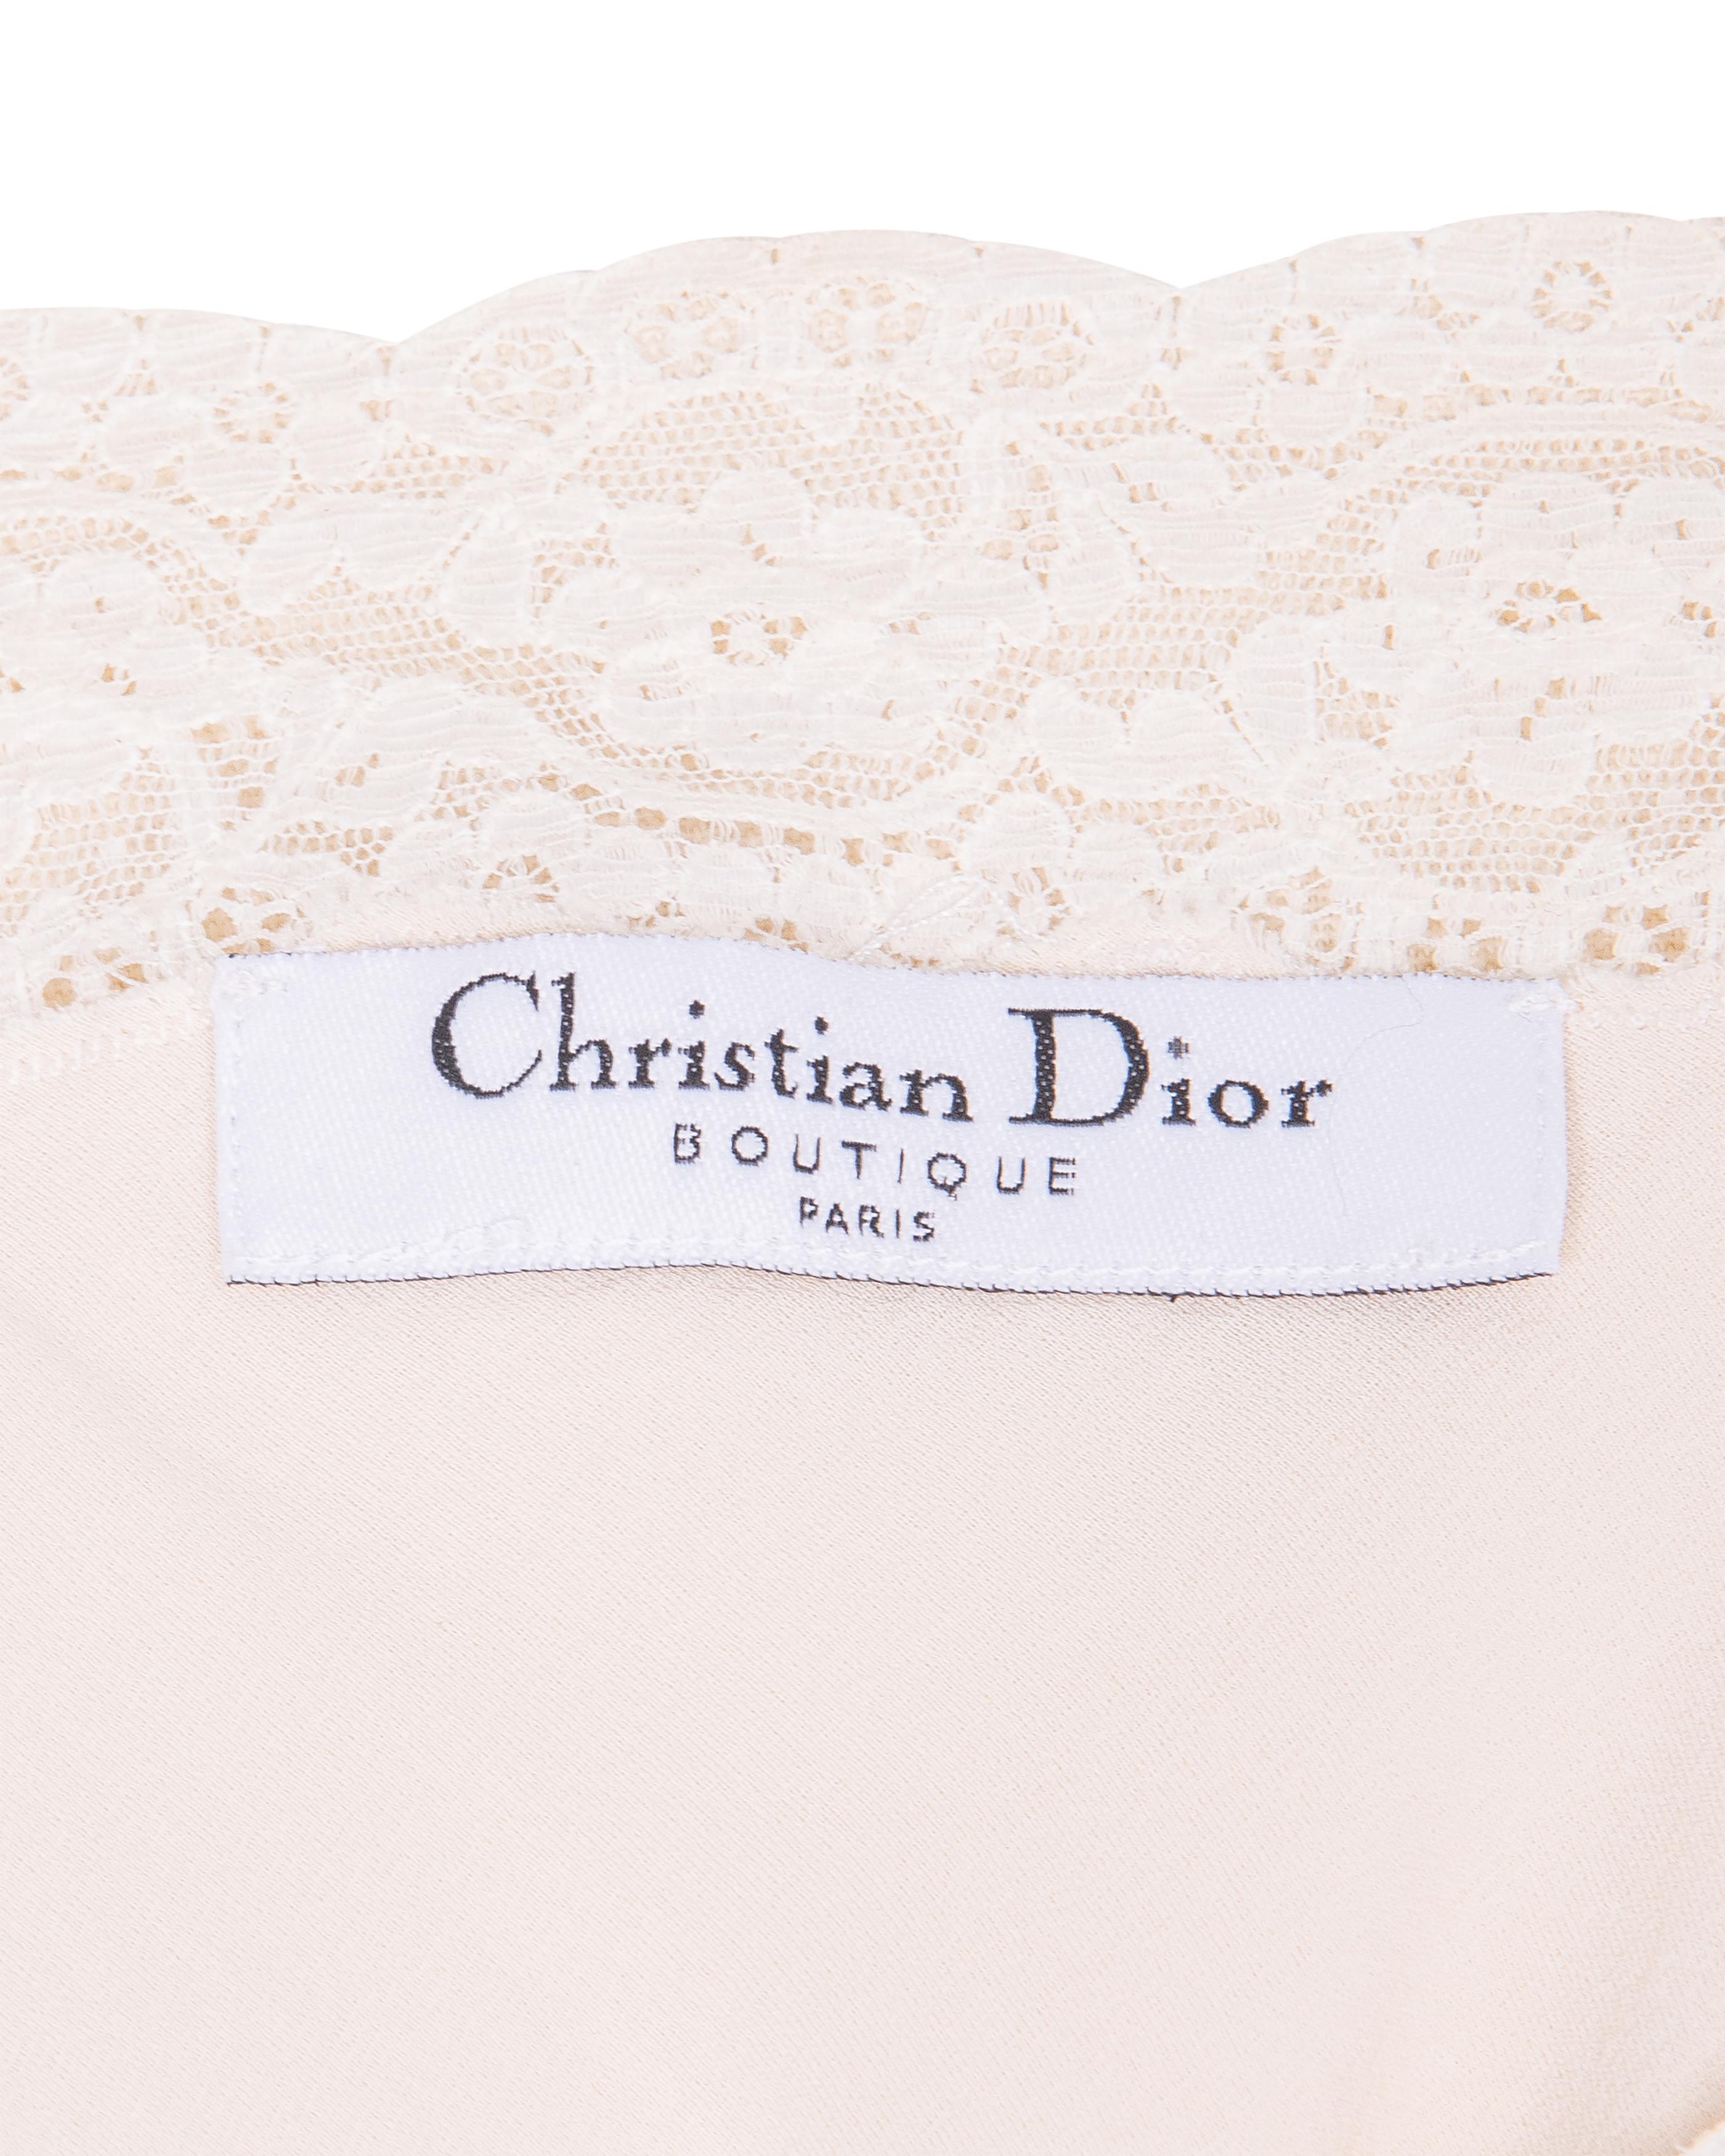 S/S 2005 Christian Dior by John Galliano Polka Dot Bias Cut Cream Slip Dress 3